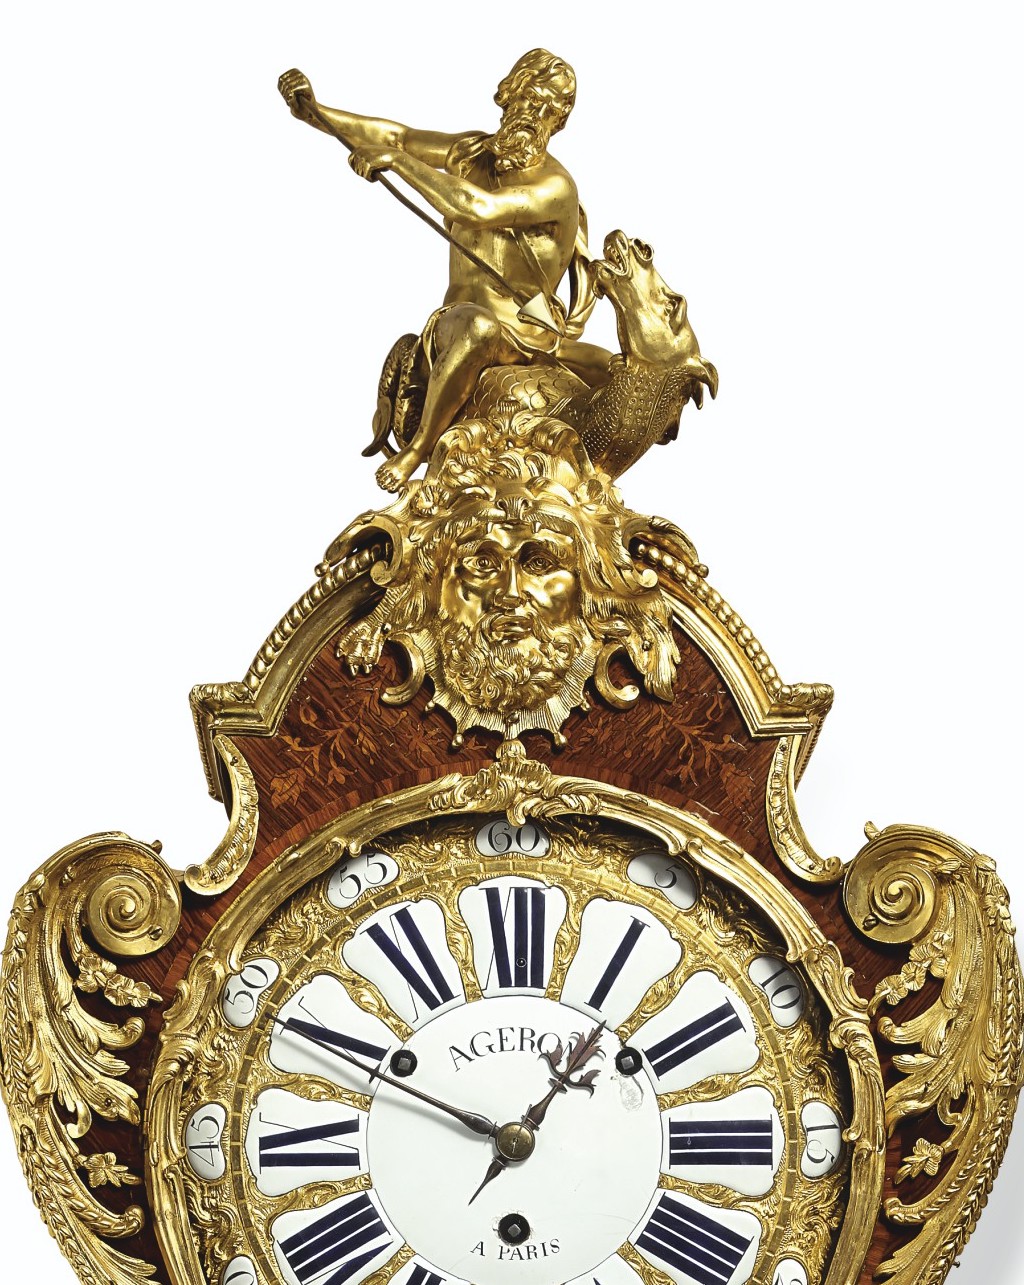 Horloges et pendules du XVIIIe siècle - Page 2 2020_n39